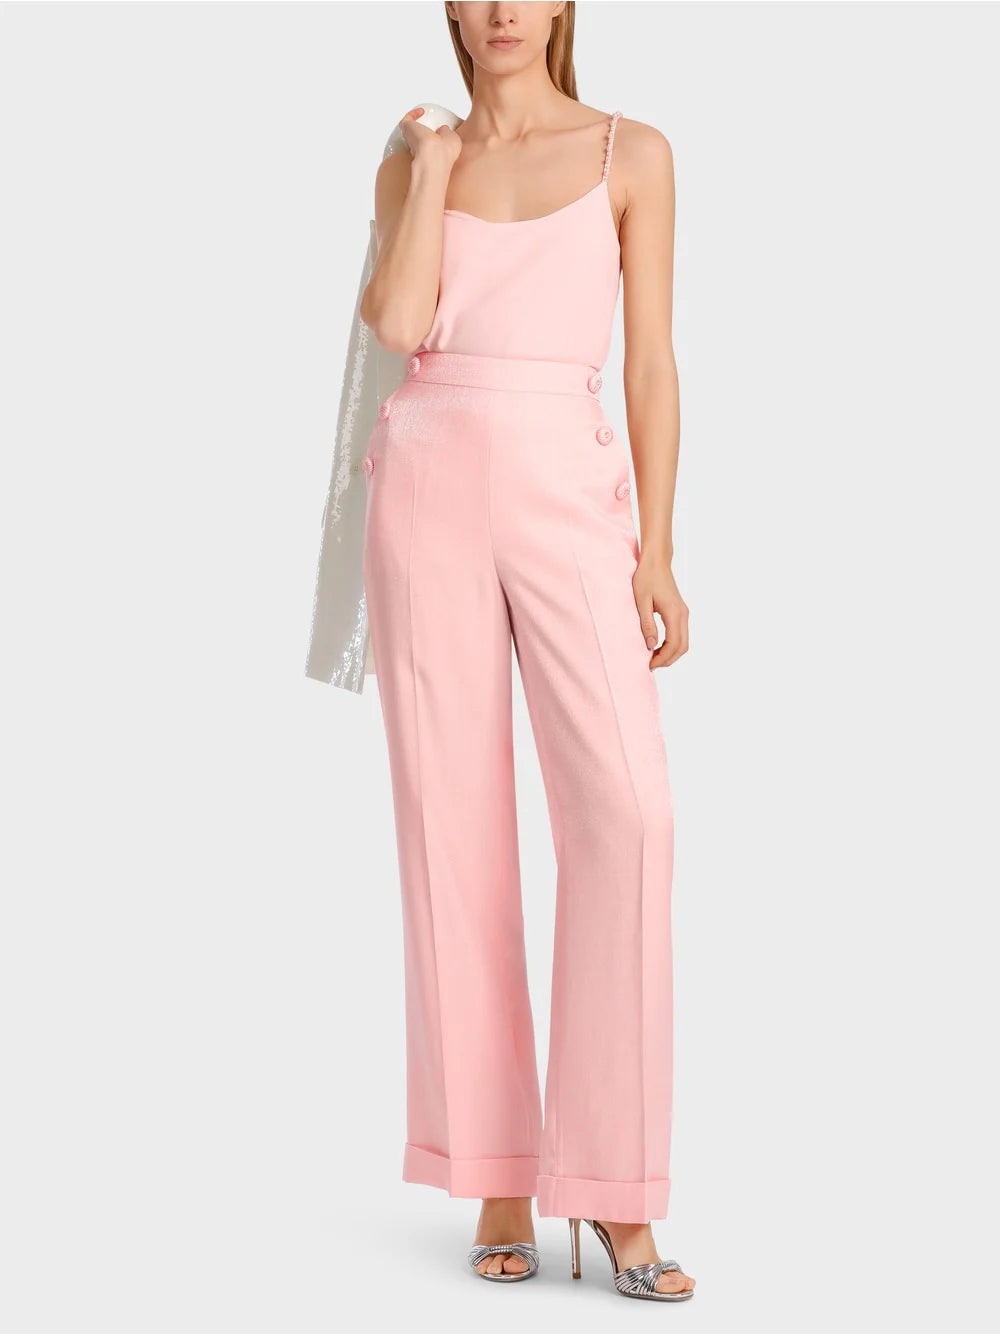 Marc Cain Soft Seashell Pink Model WHEATEN - Elegant pants